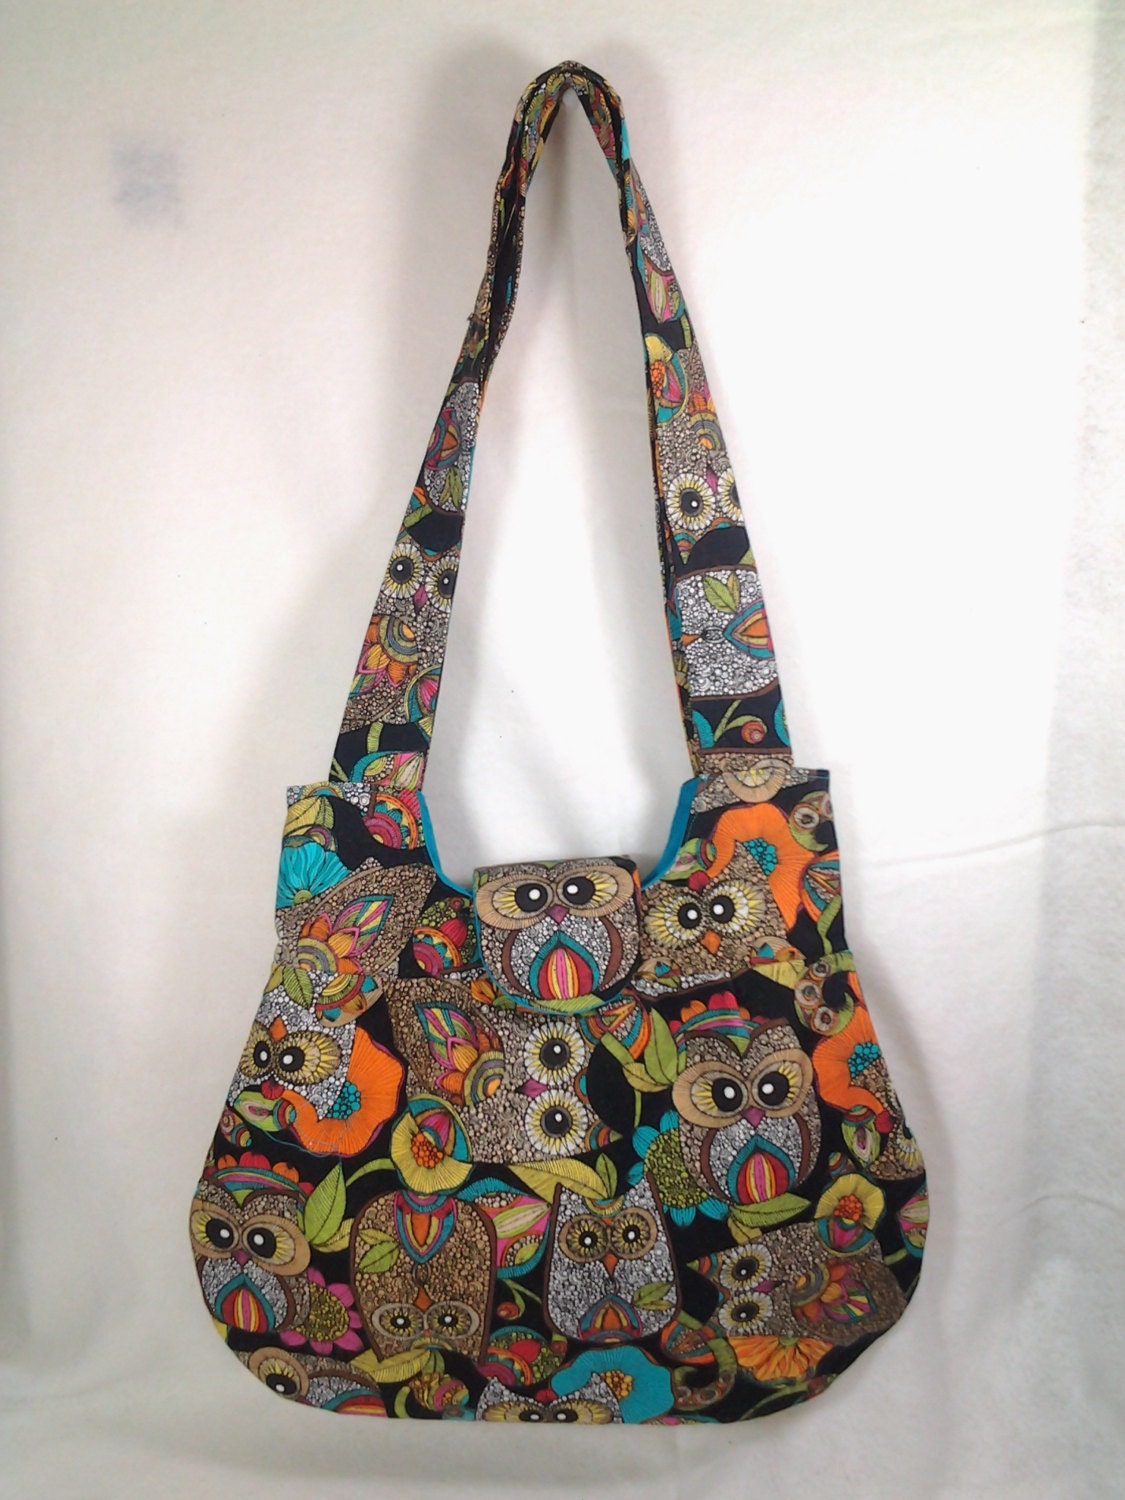 Little Owl Jewel Tone Handbag Tote | Etsy